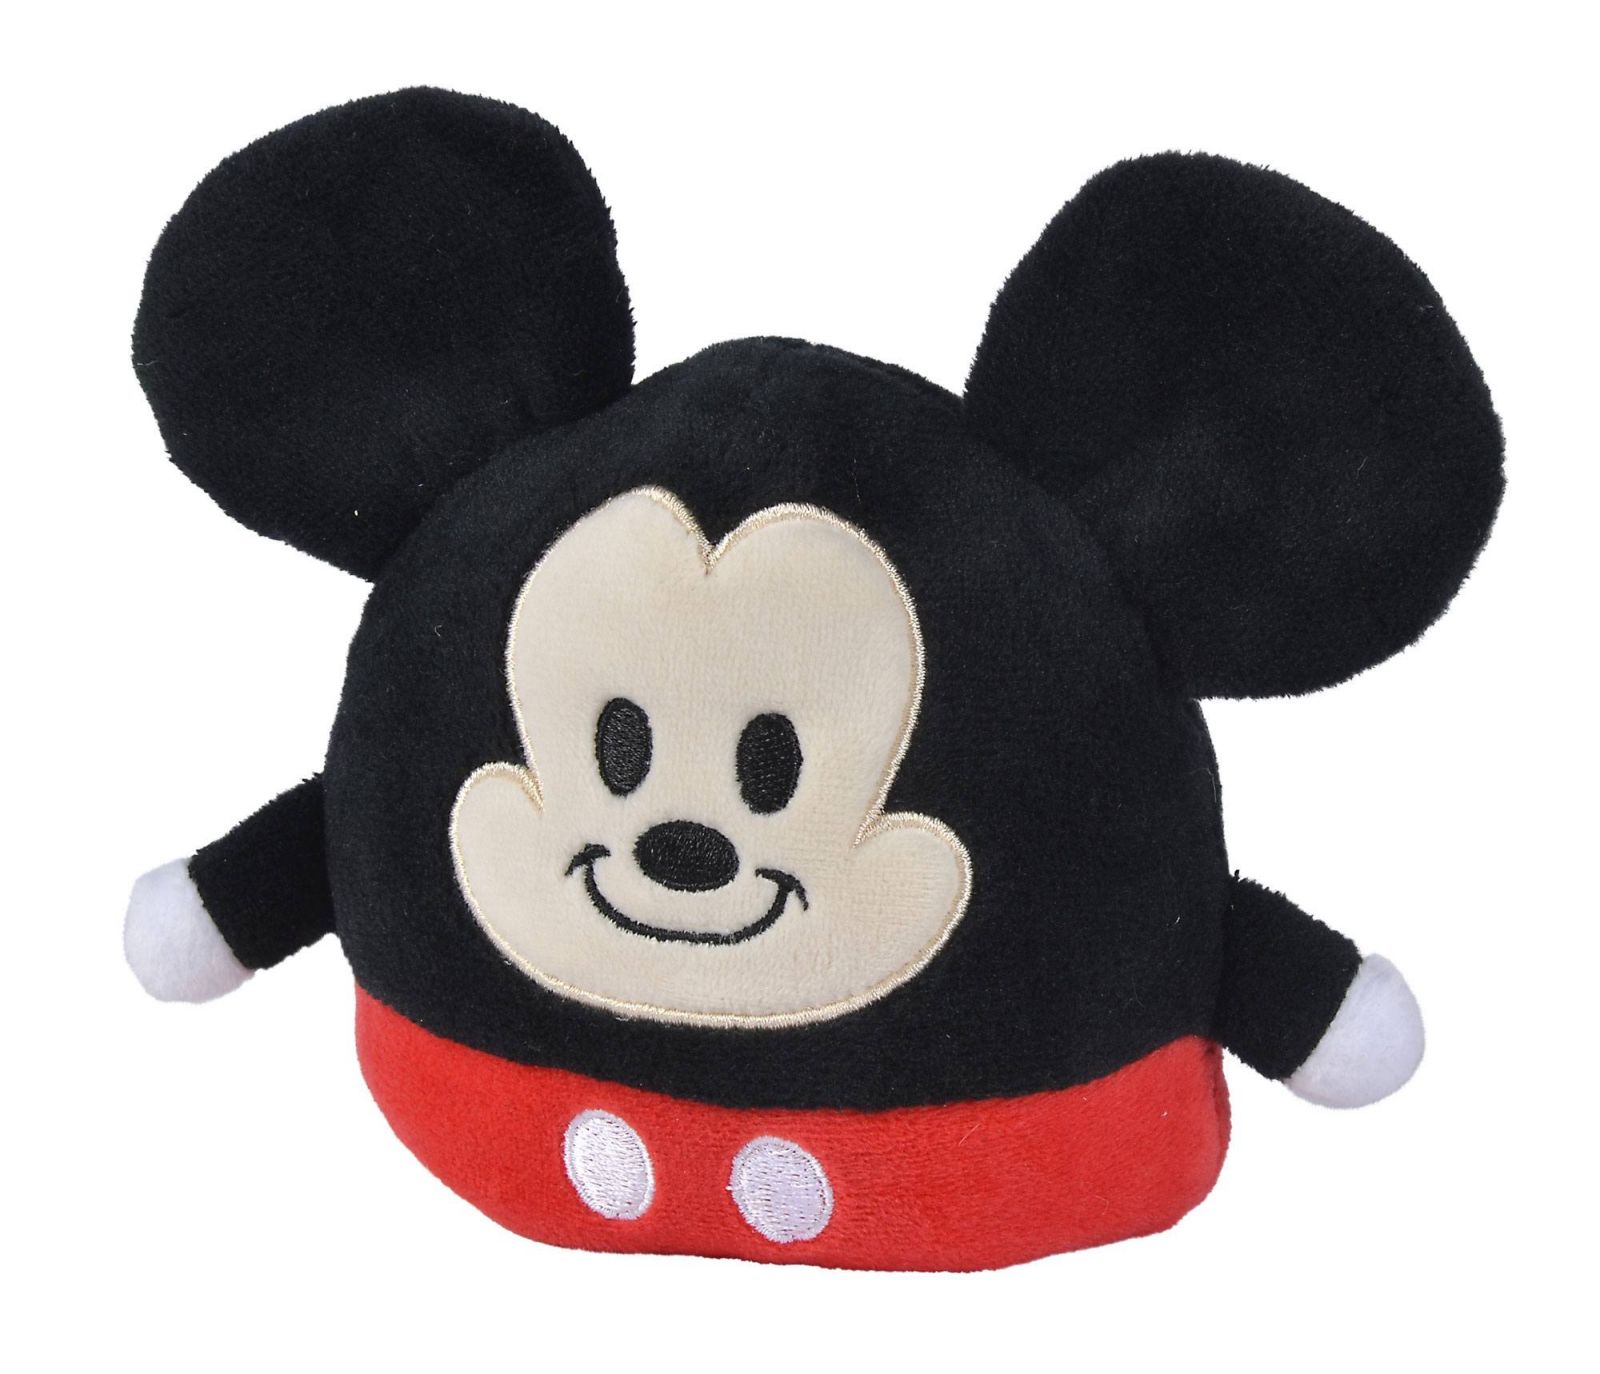 Disney: Mickey Mouse Reversible Plush Figure Mickey/Minnie 8 cm Simba